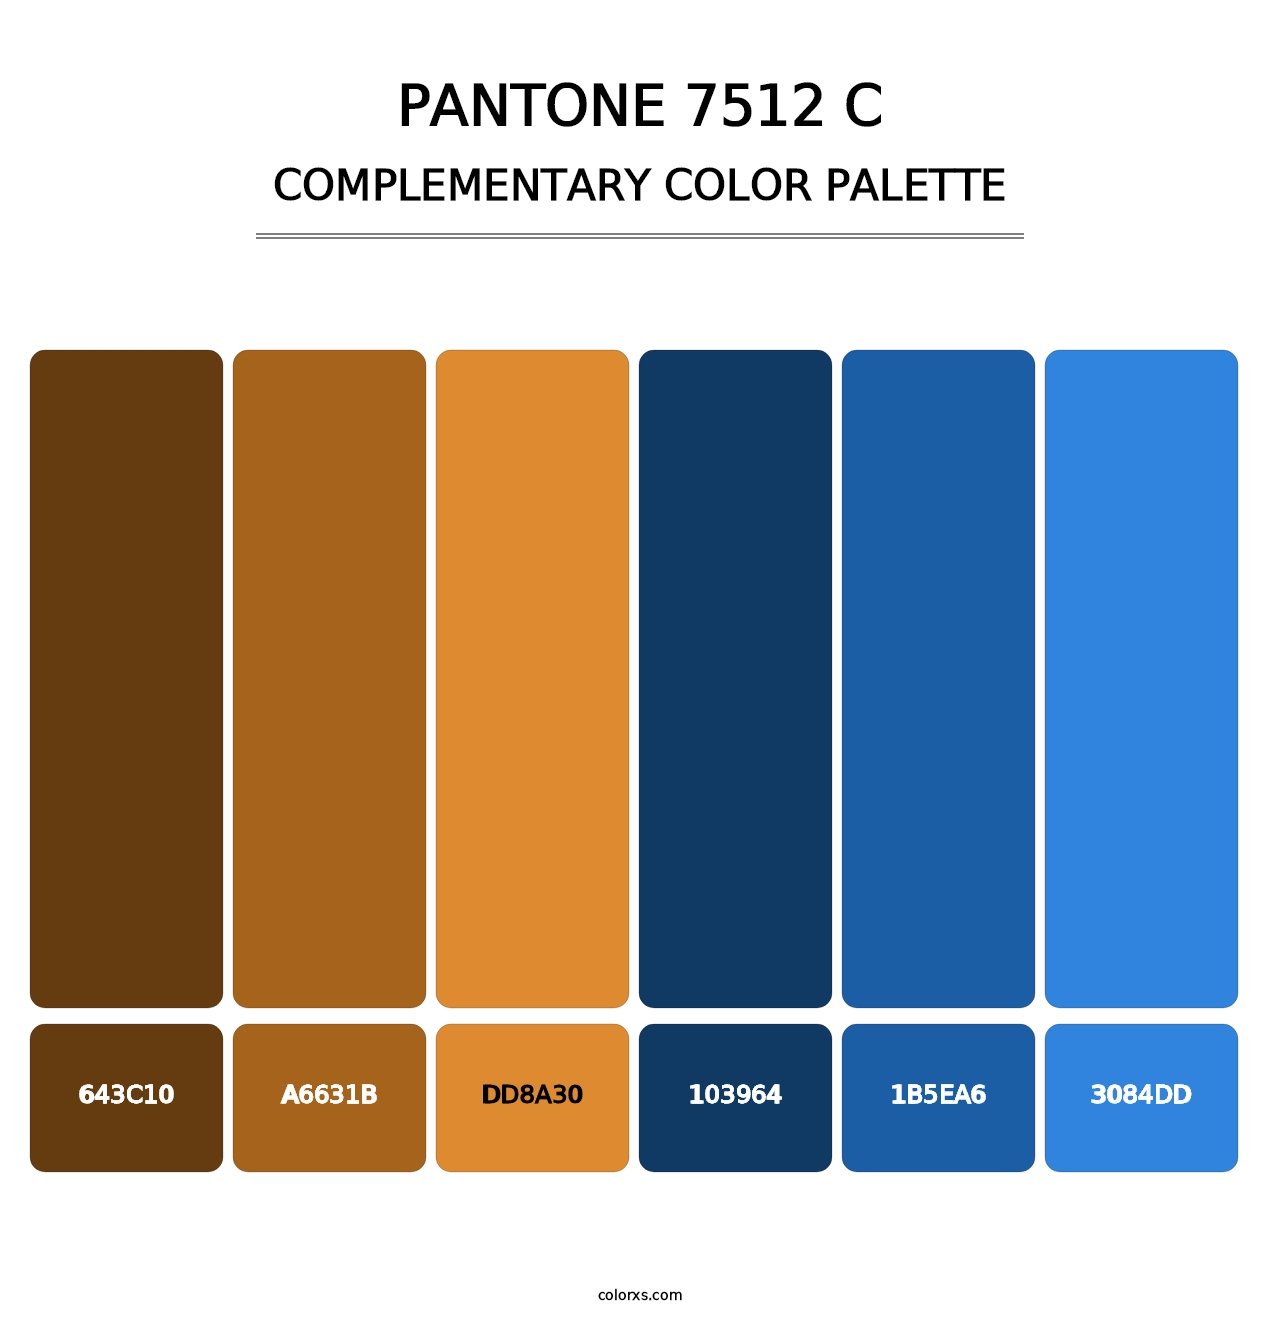 PANTONE 7512 C - Complementary Color Palette